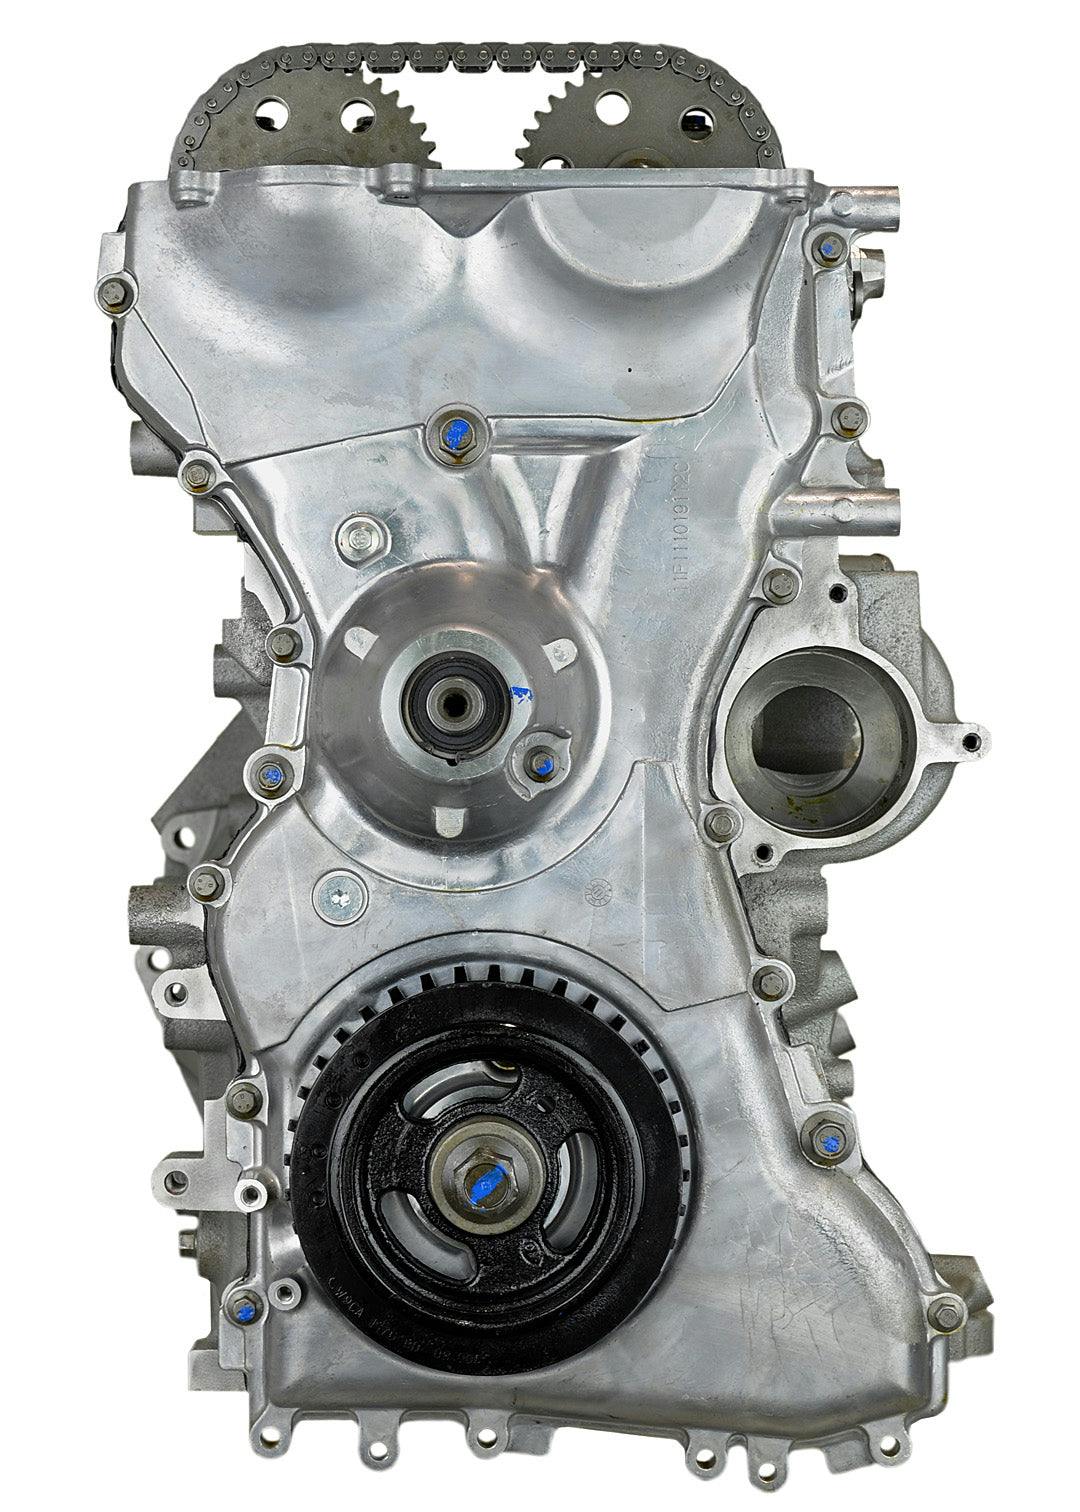 2.3L Inline-4 Engine for 2001-2002 Ford Ranger/Mazda B2300